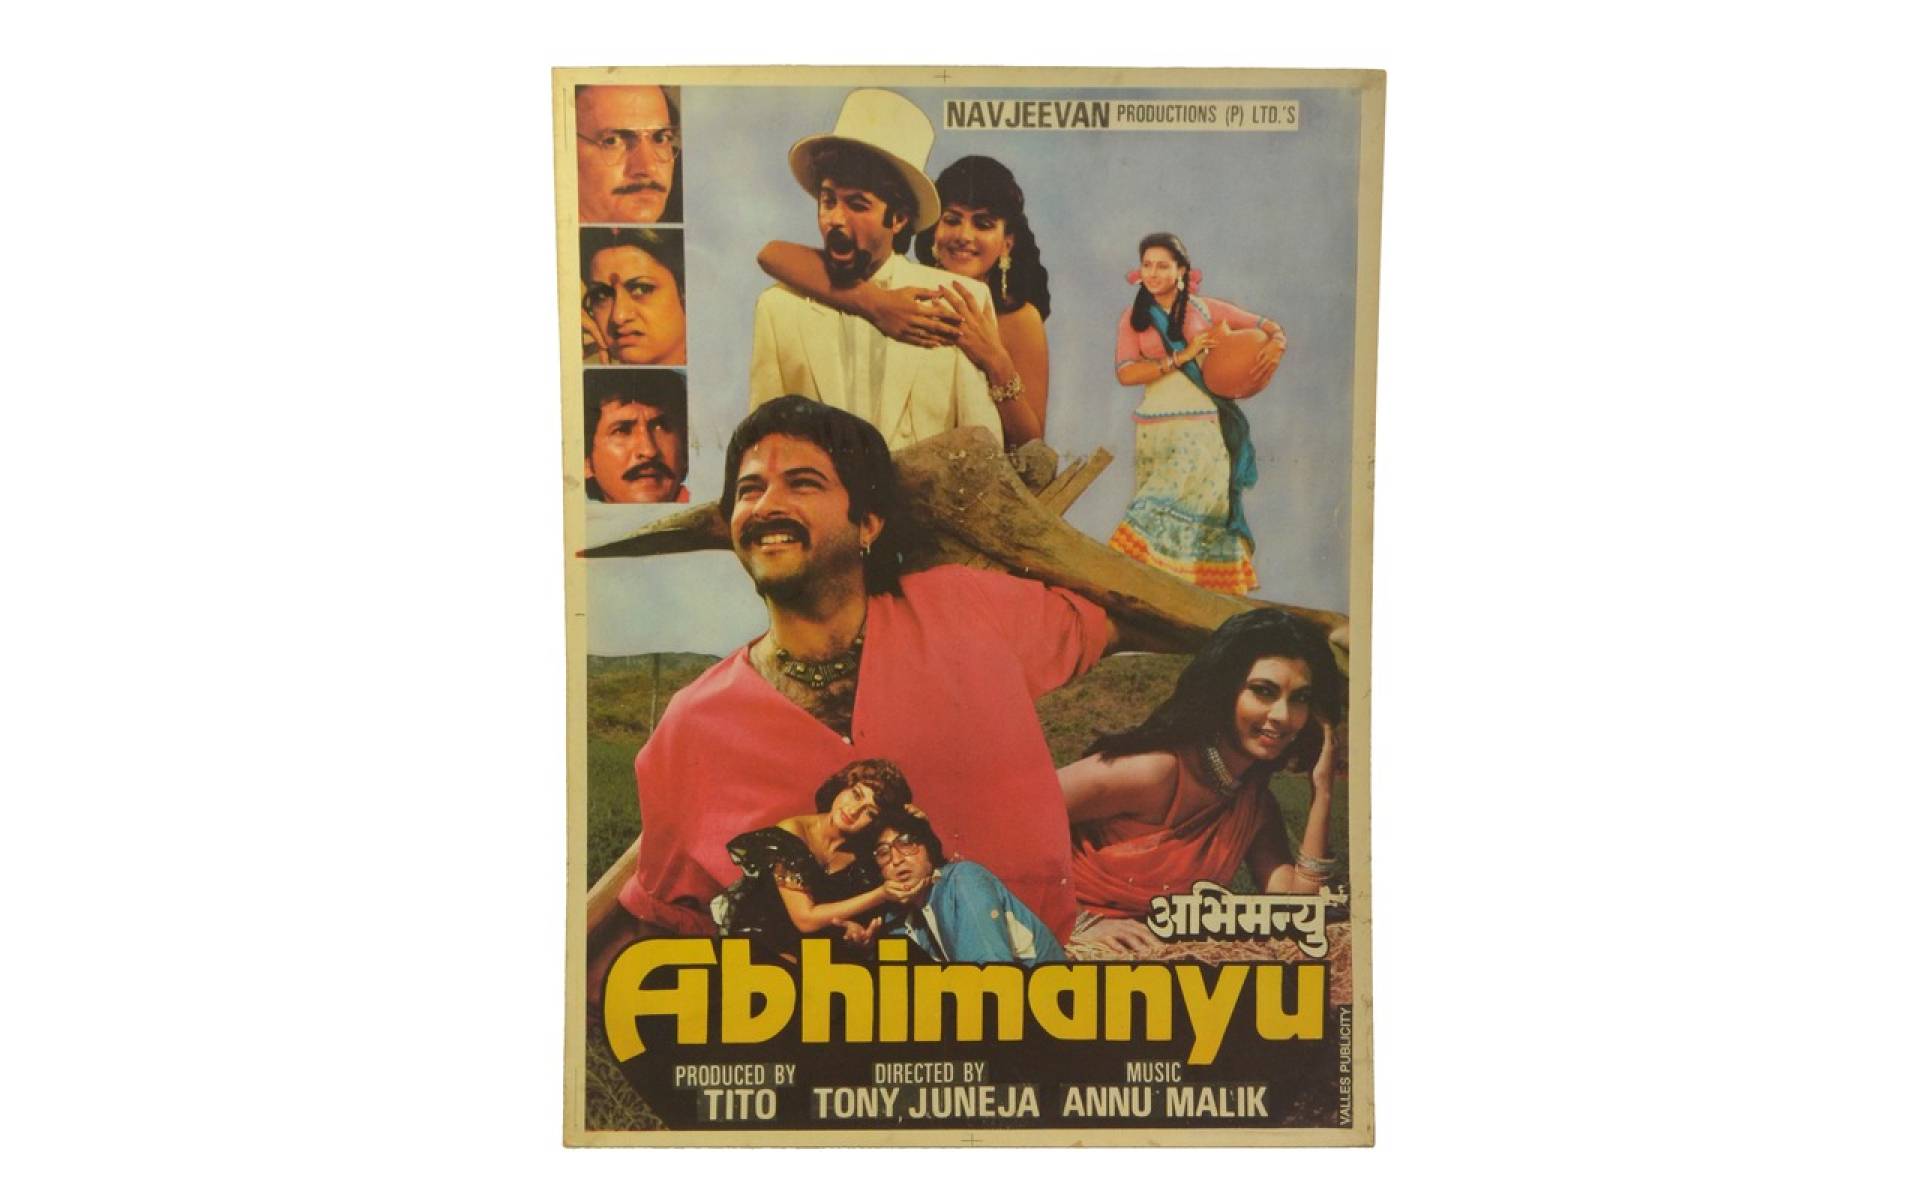 Filmový plagát Bollywood, Antik cca 98x75cm